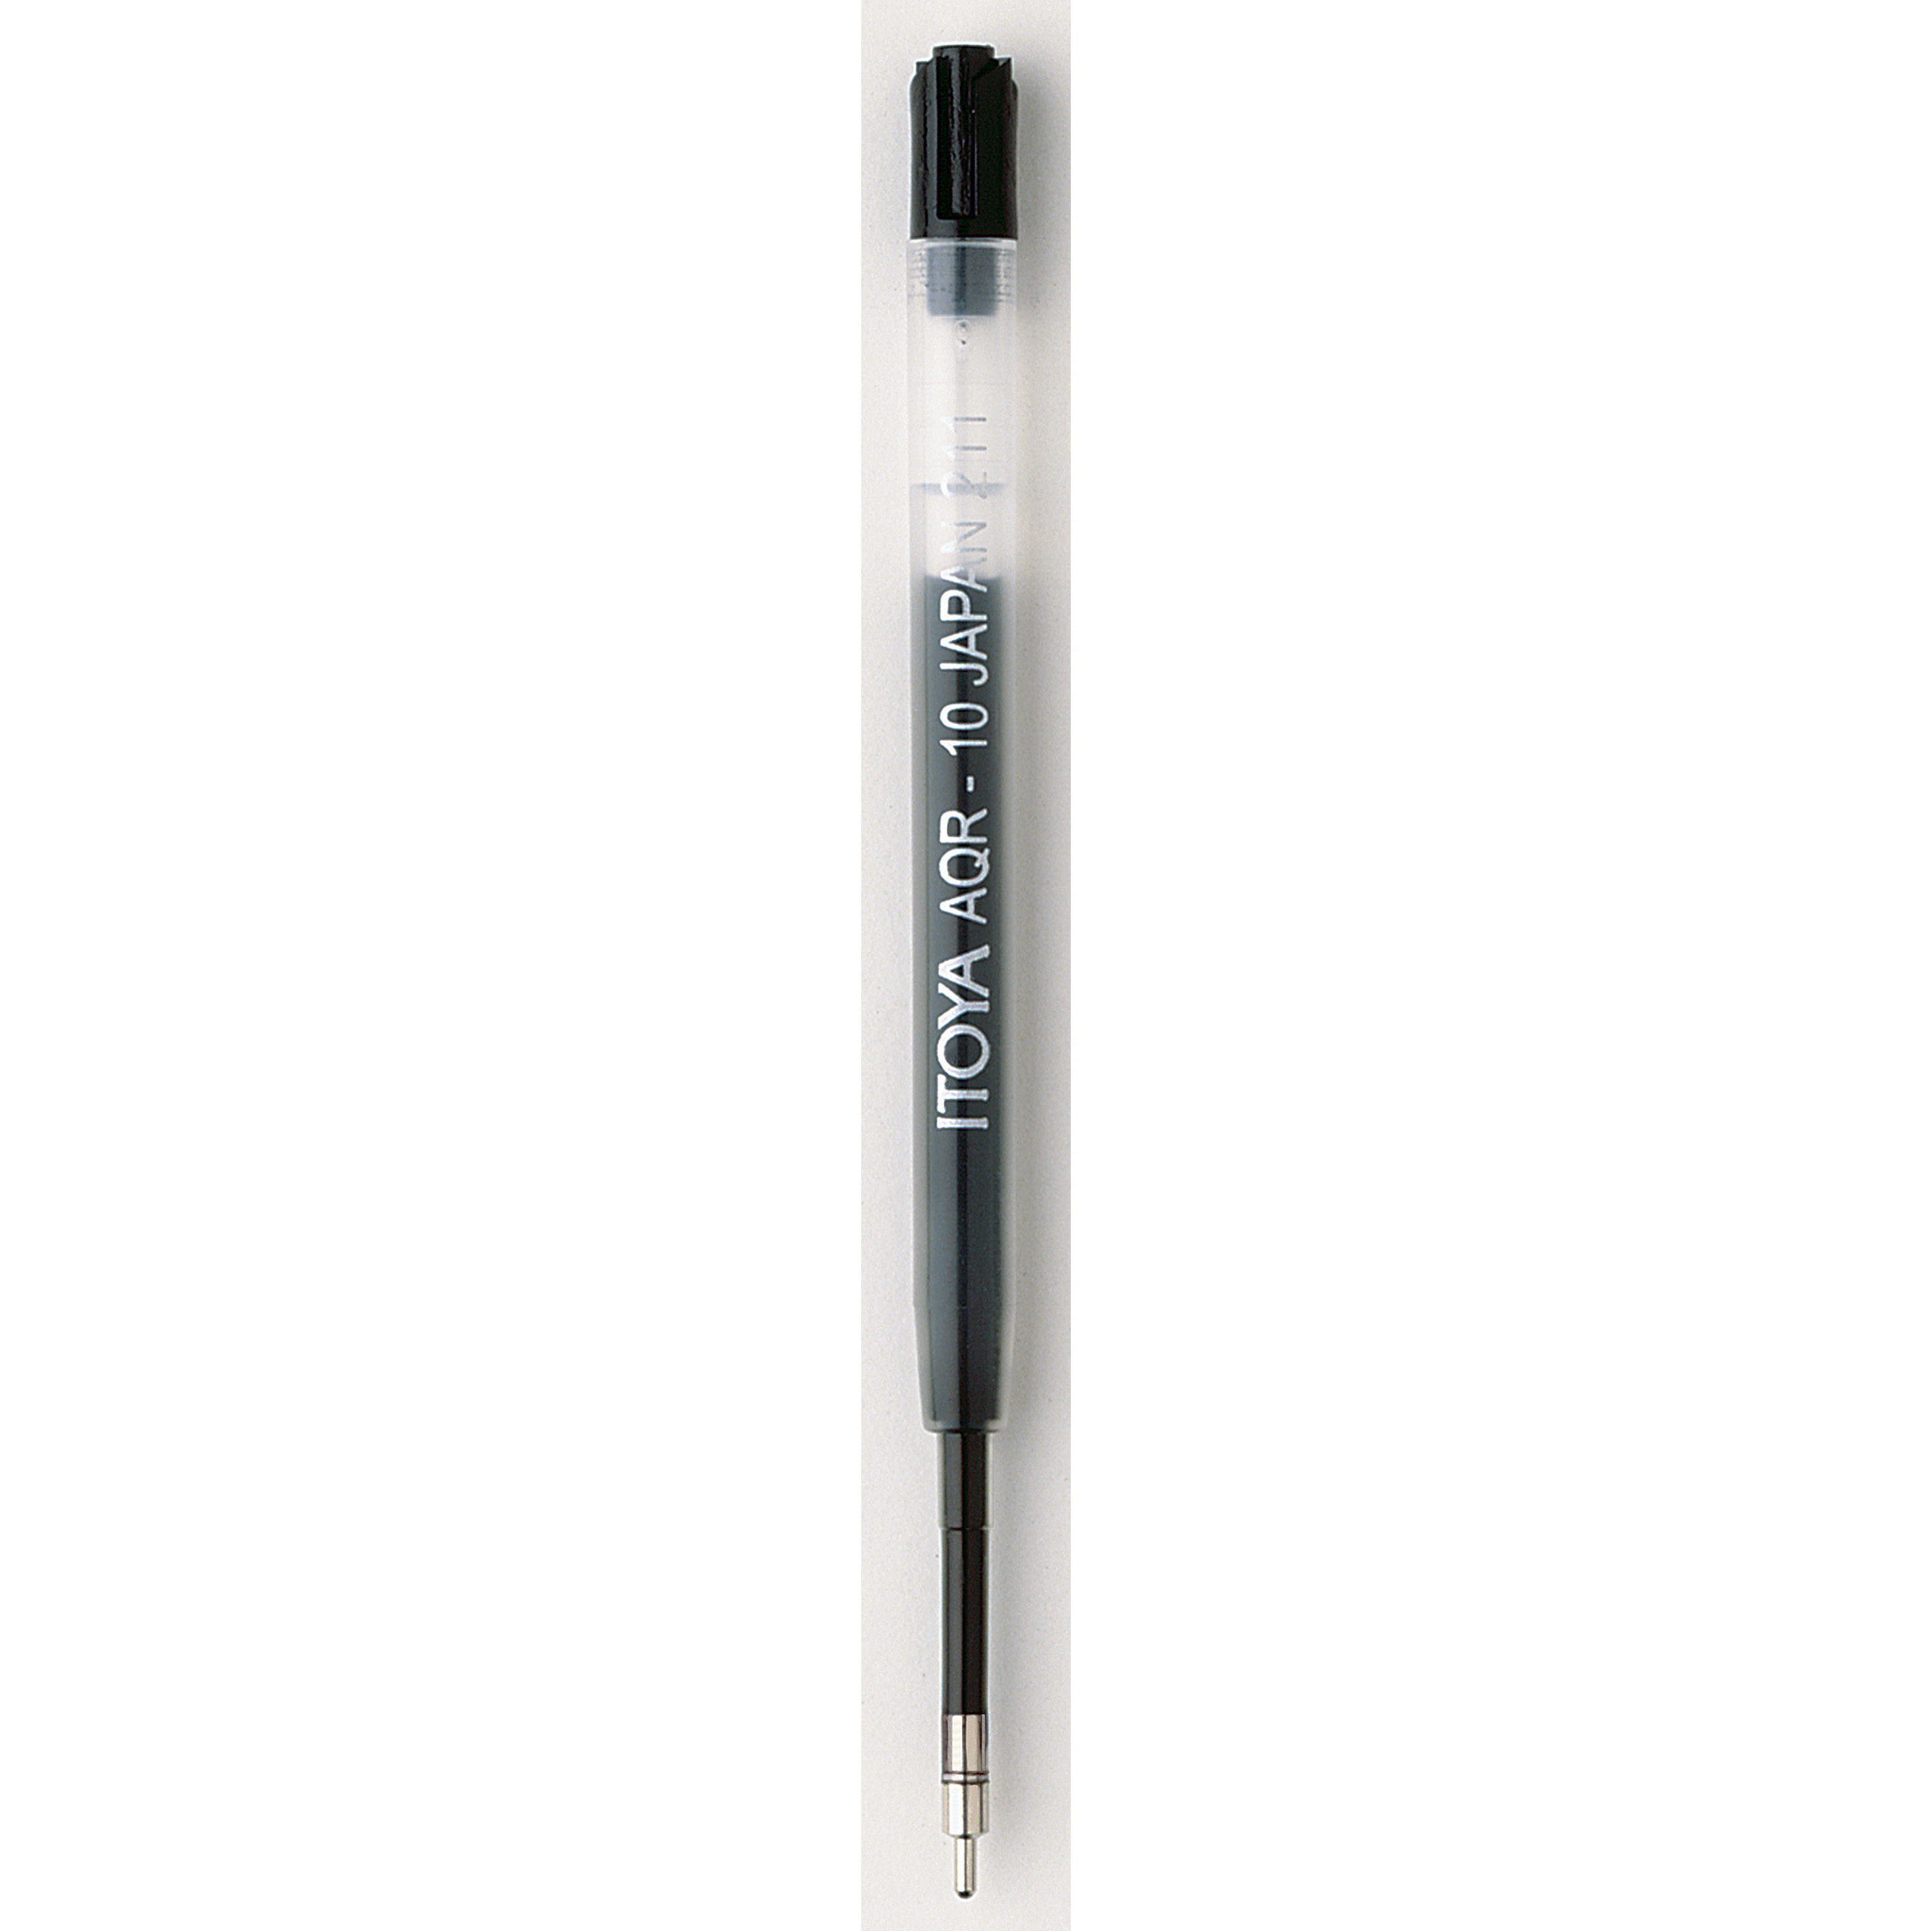 ITOYA NP NPR5BPBK Pen Refill, Black, 0.5 mm - 1